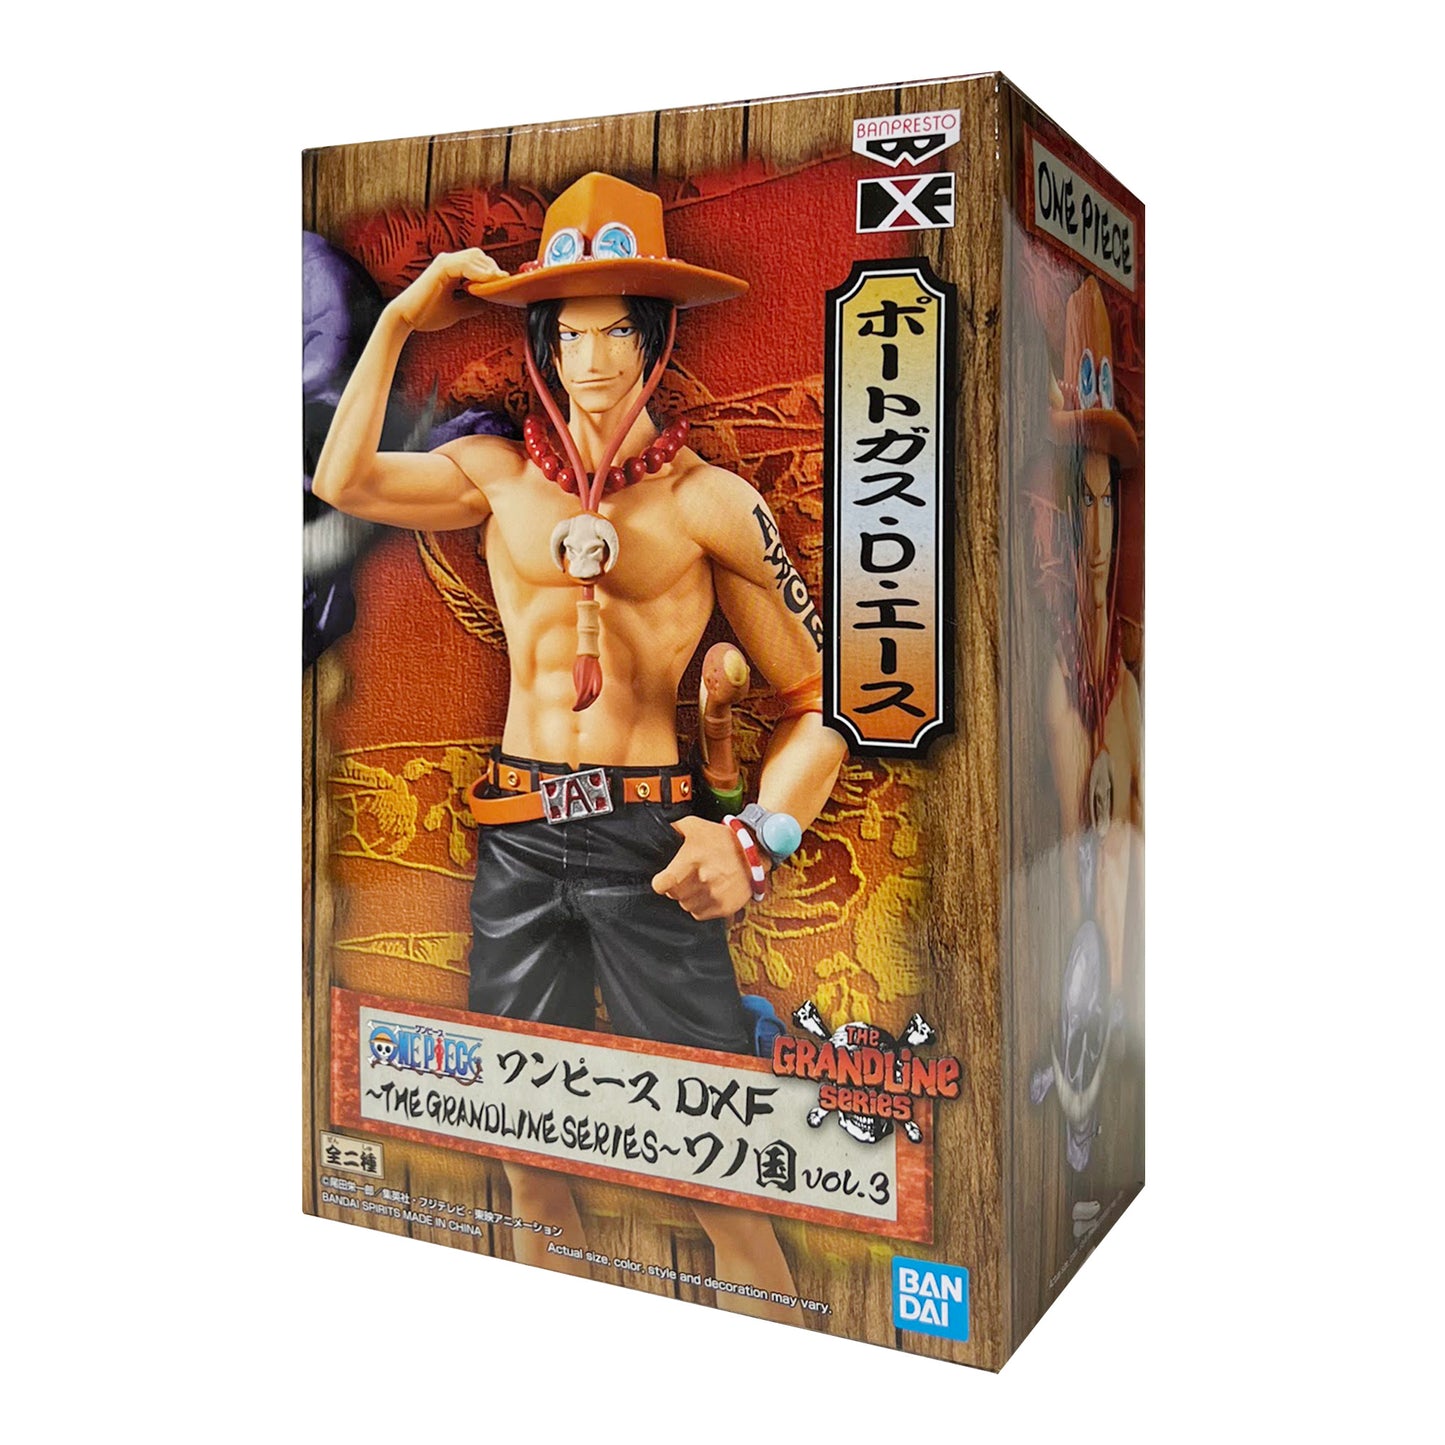 Banpresto x Bandai: One Piece - The Grandline Wano Country Vol.3 Portgas D. Ace Figure